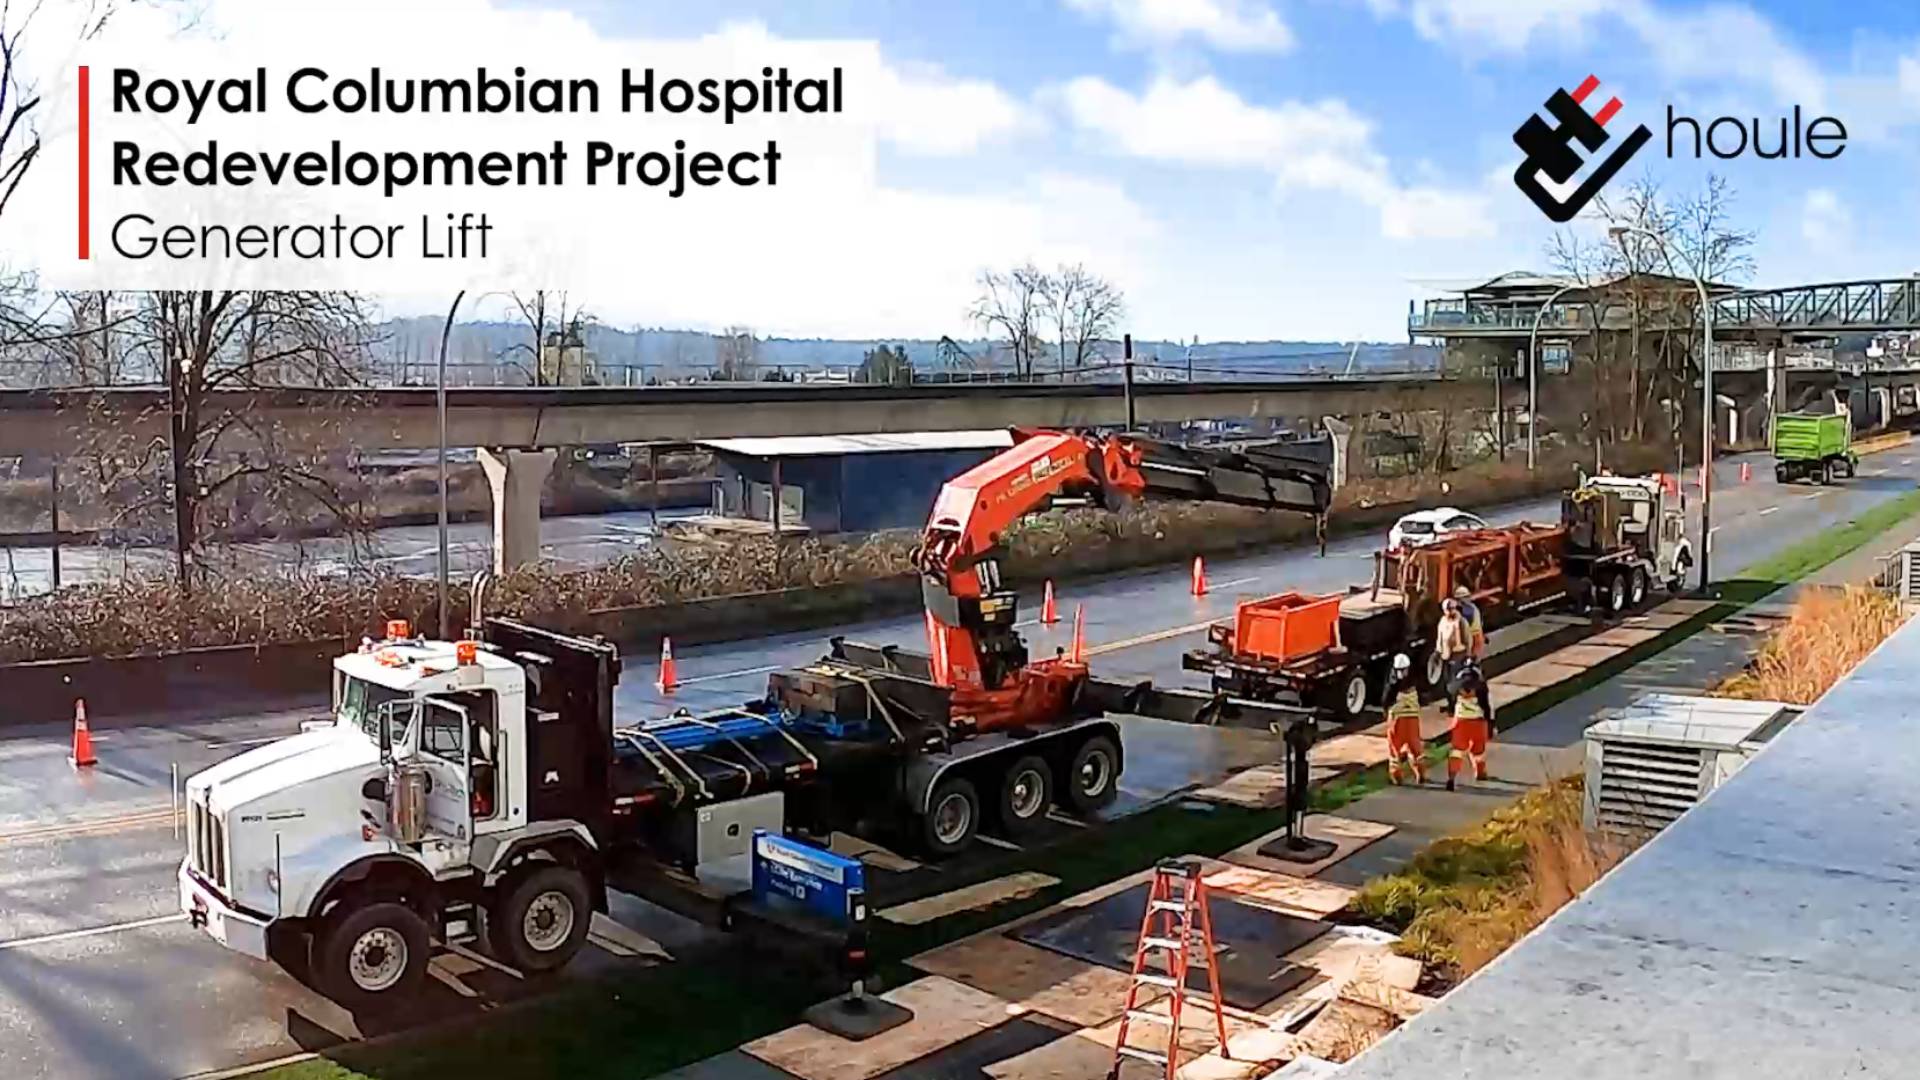 Royal Columbian Hospital Redevelopment Project - Generator Lift Video